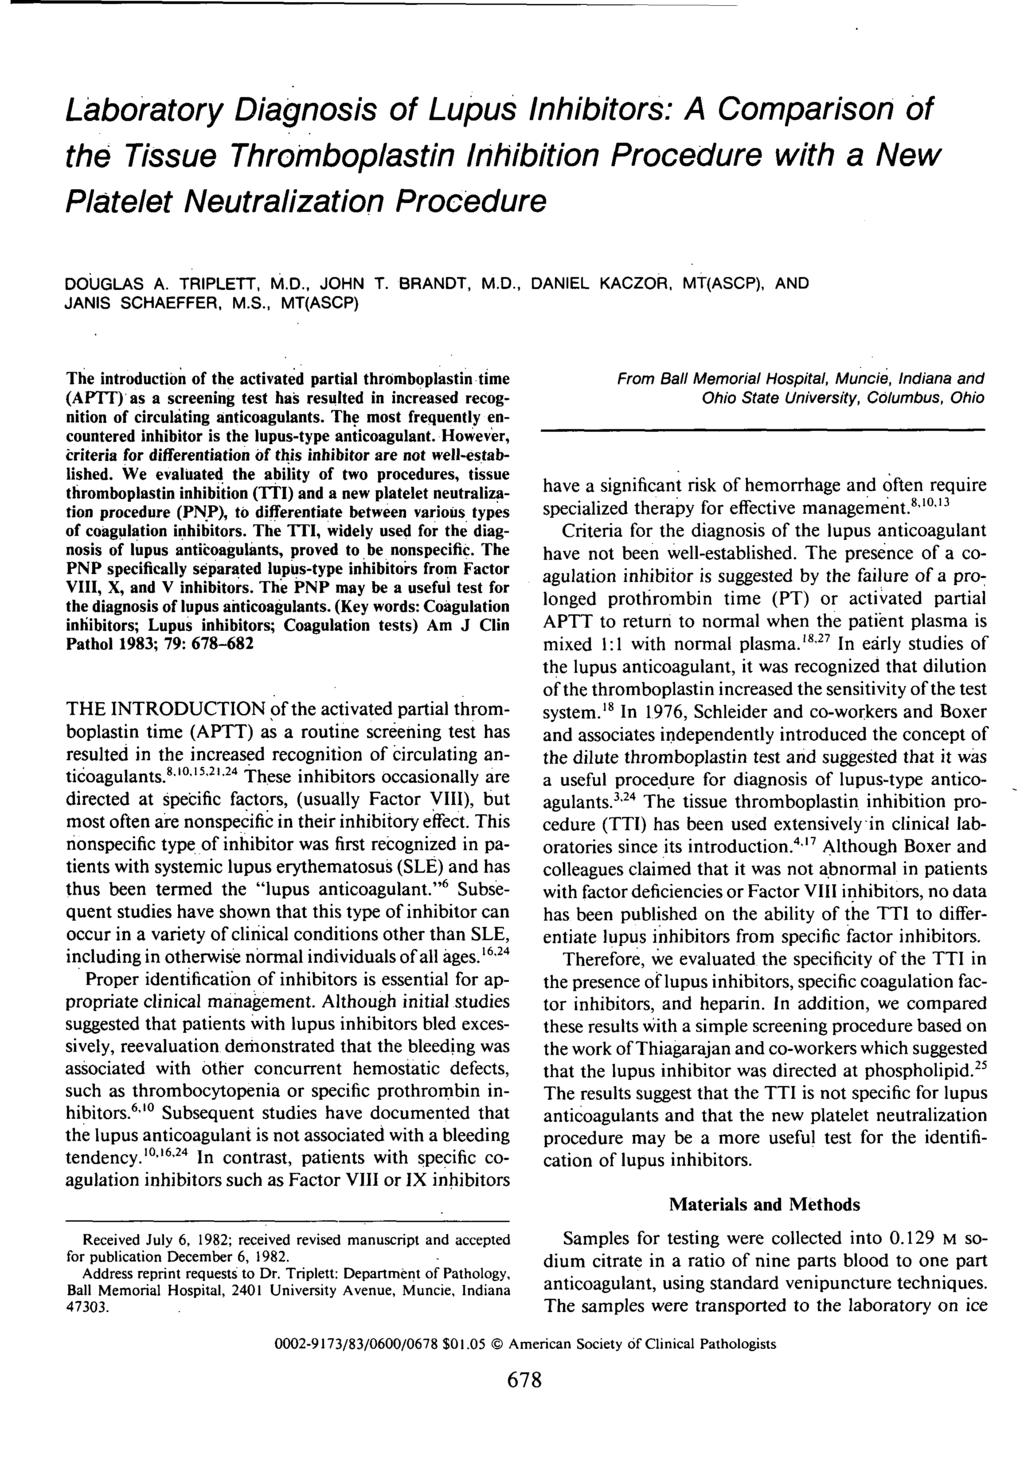 Laboratory Diagnosis of Lupus Inhibitors: A Comparison of the Tissue Thromboplastin Inhibition Procedure with a New Platelet Neutralization Procedure DOUGLAS A. TRIPLETT, M.D., JOHN T. BRANDT, M.D. JANIS SCHAEFFER, M.